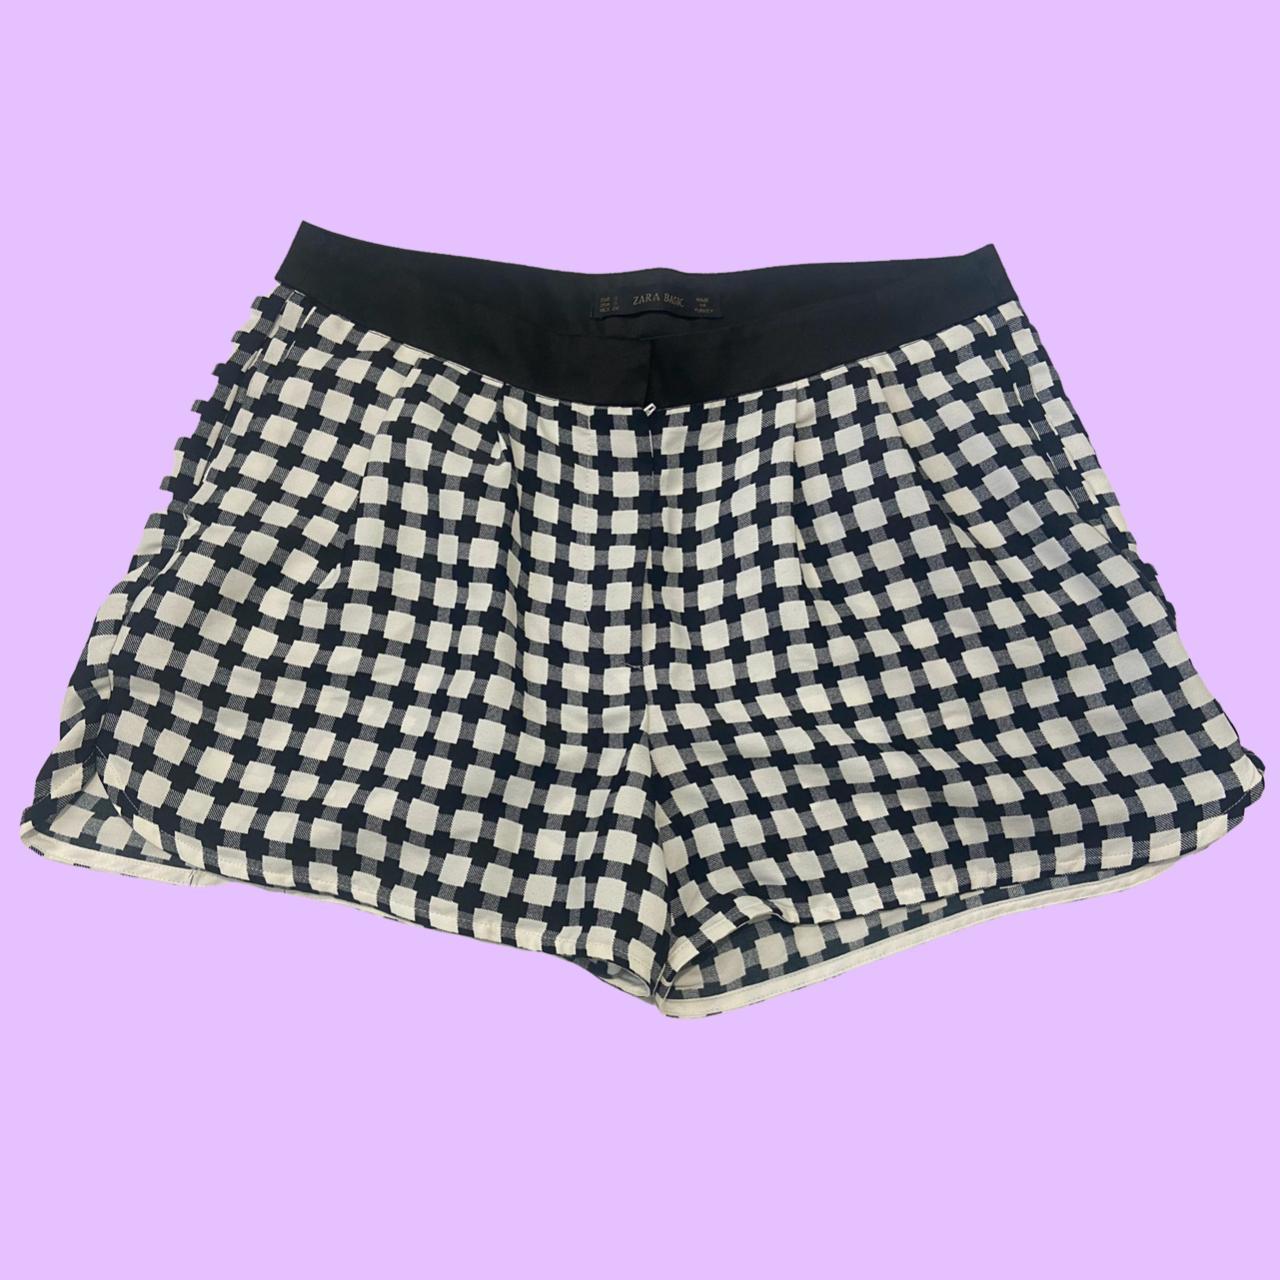 Zara Black And White Mini Shorts 🍓 Size Small Worn Depop 3363